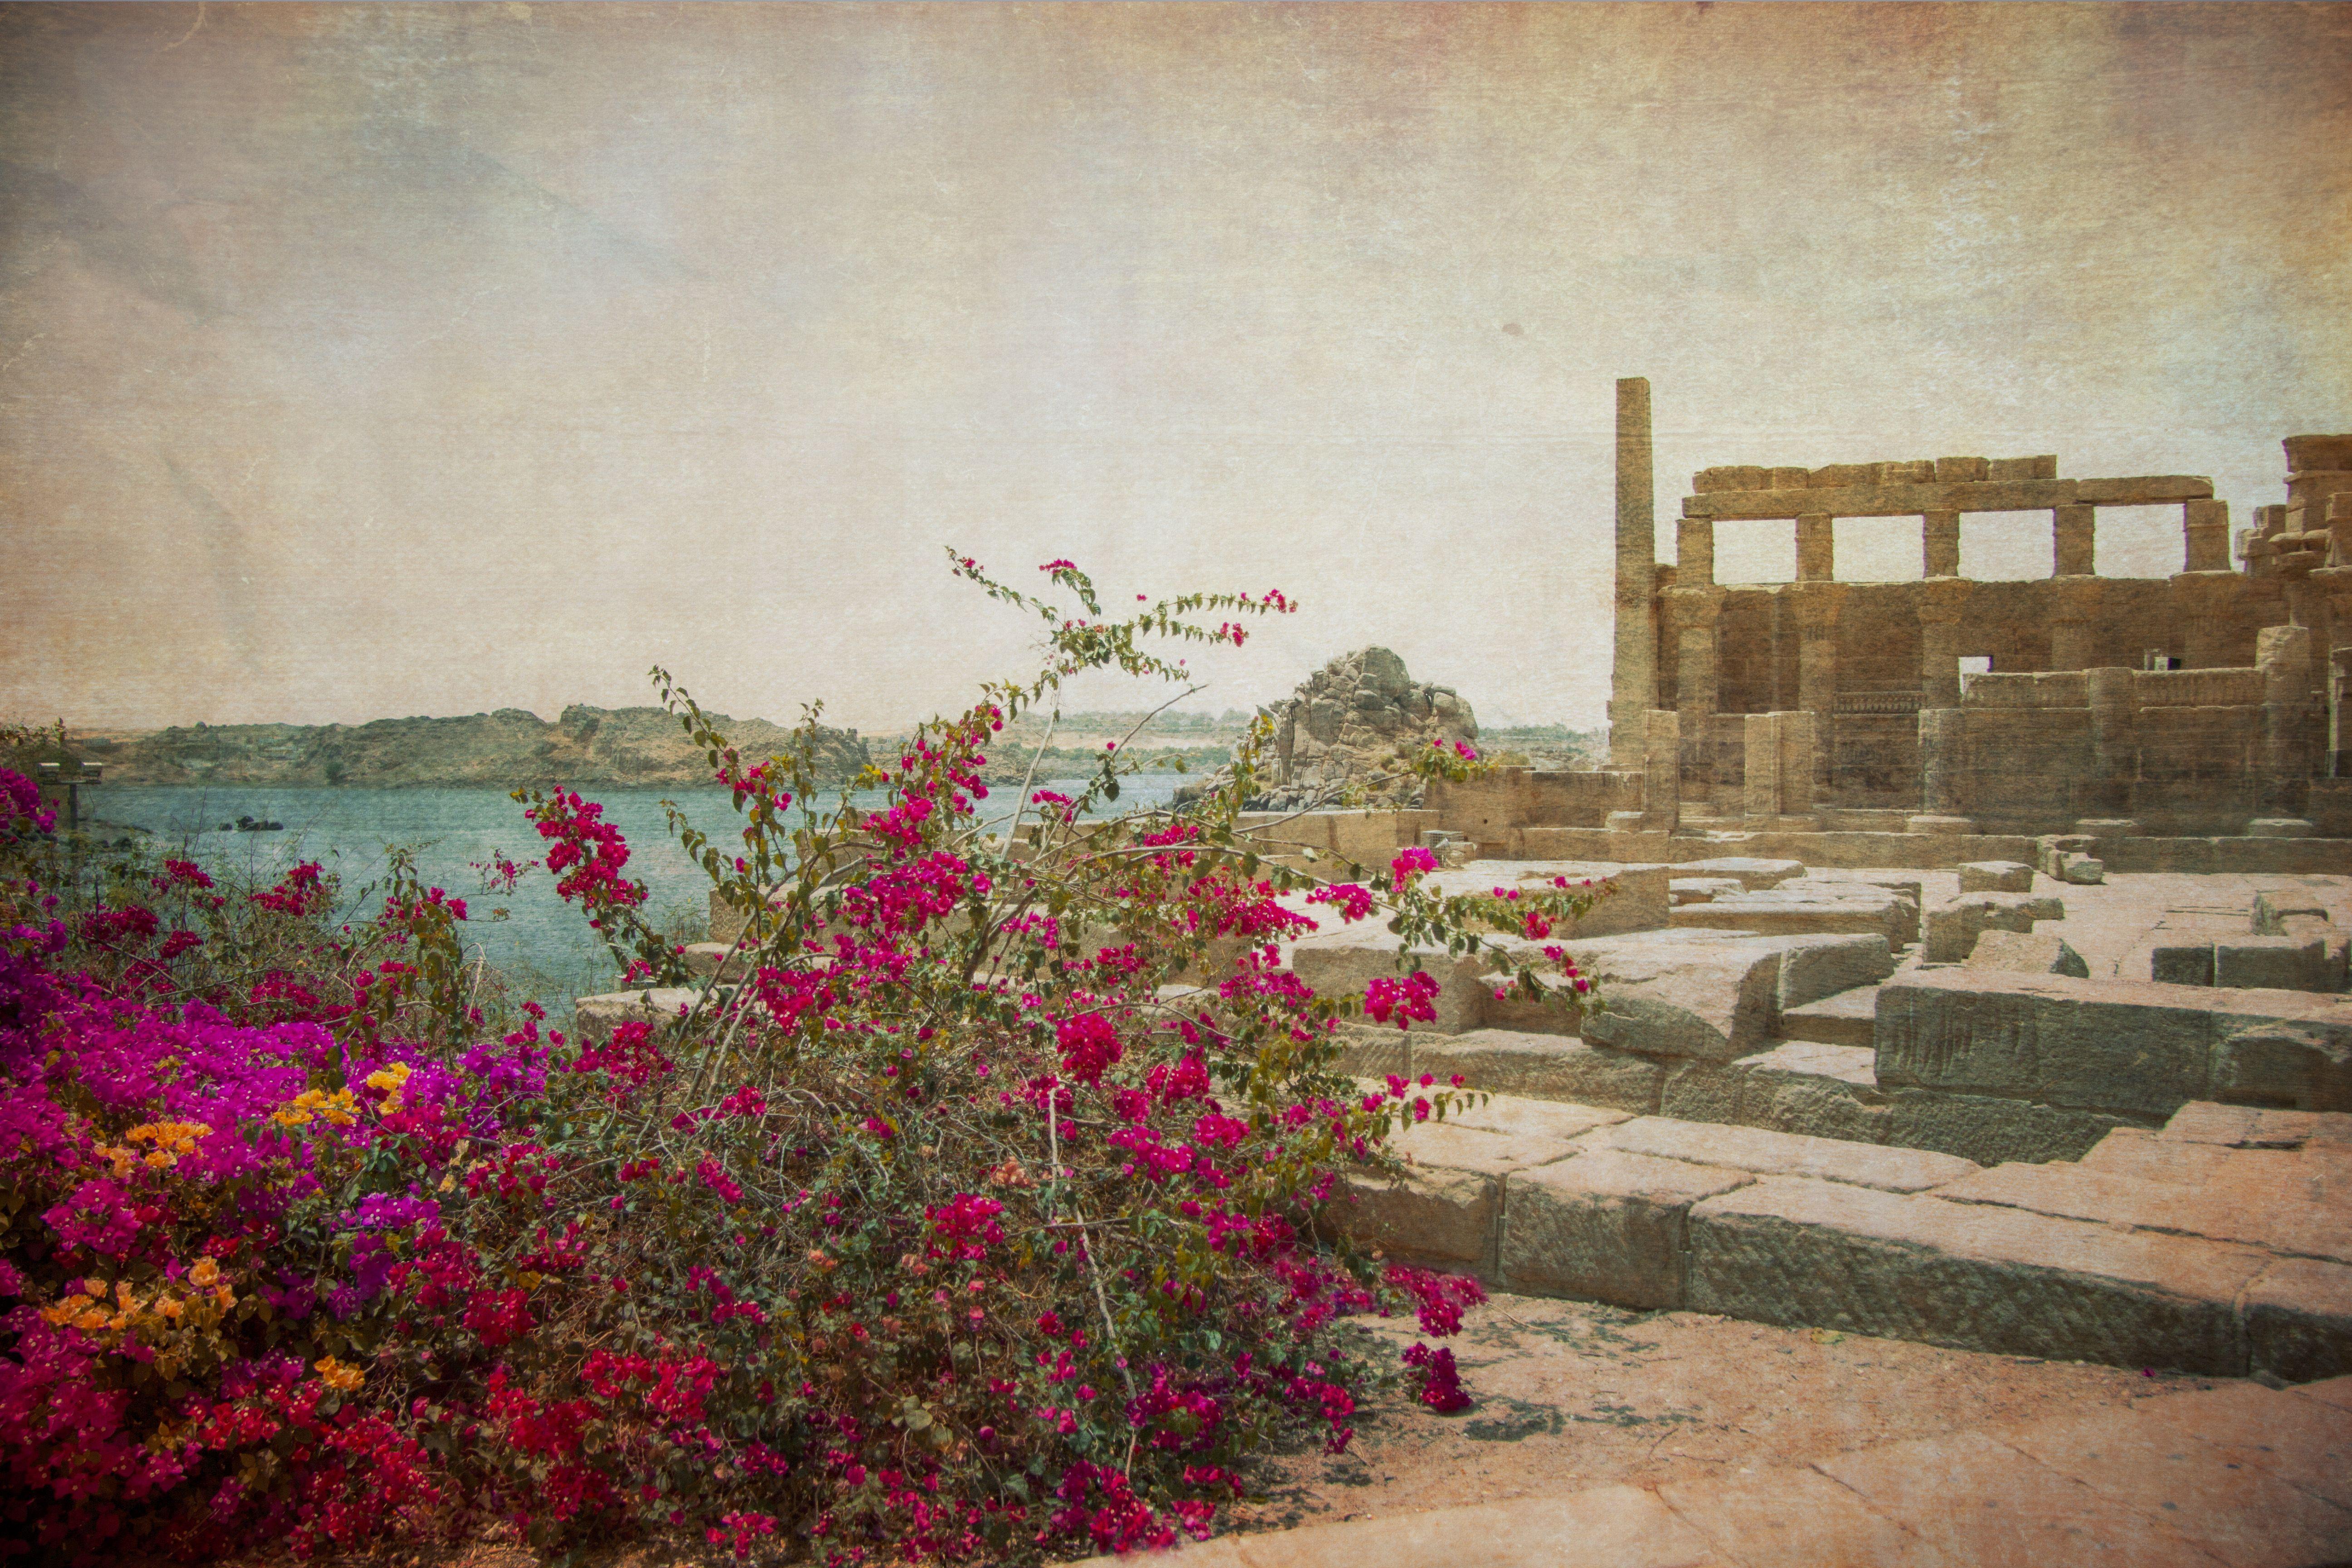 Viet Ha Tran Color Photograph - Flowers in the Egyptian castle, Photograph, C-Type